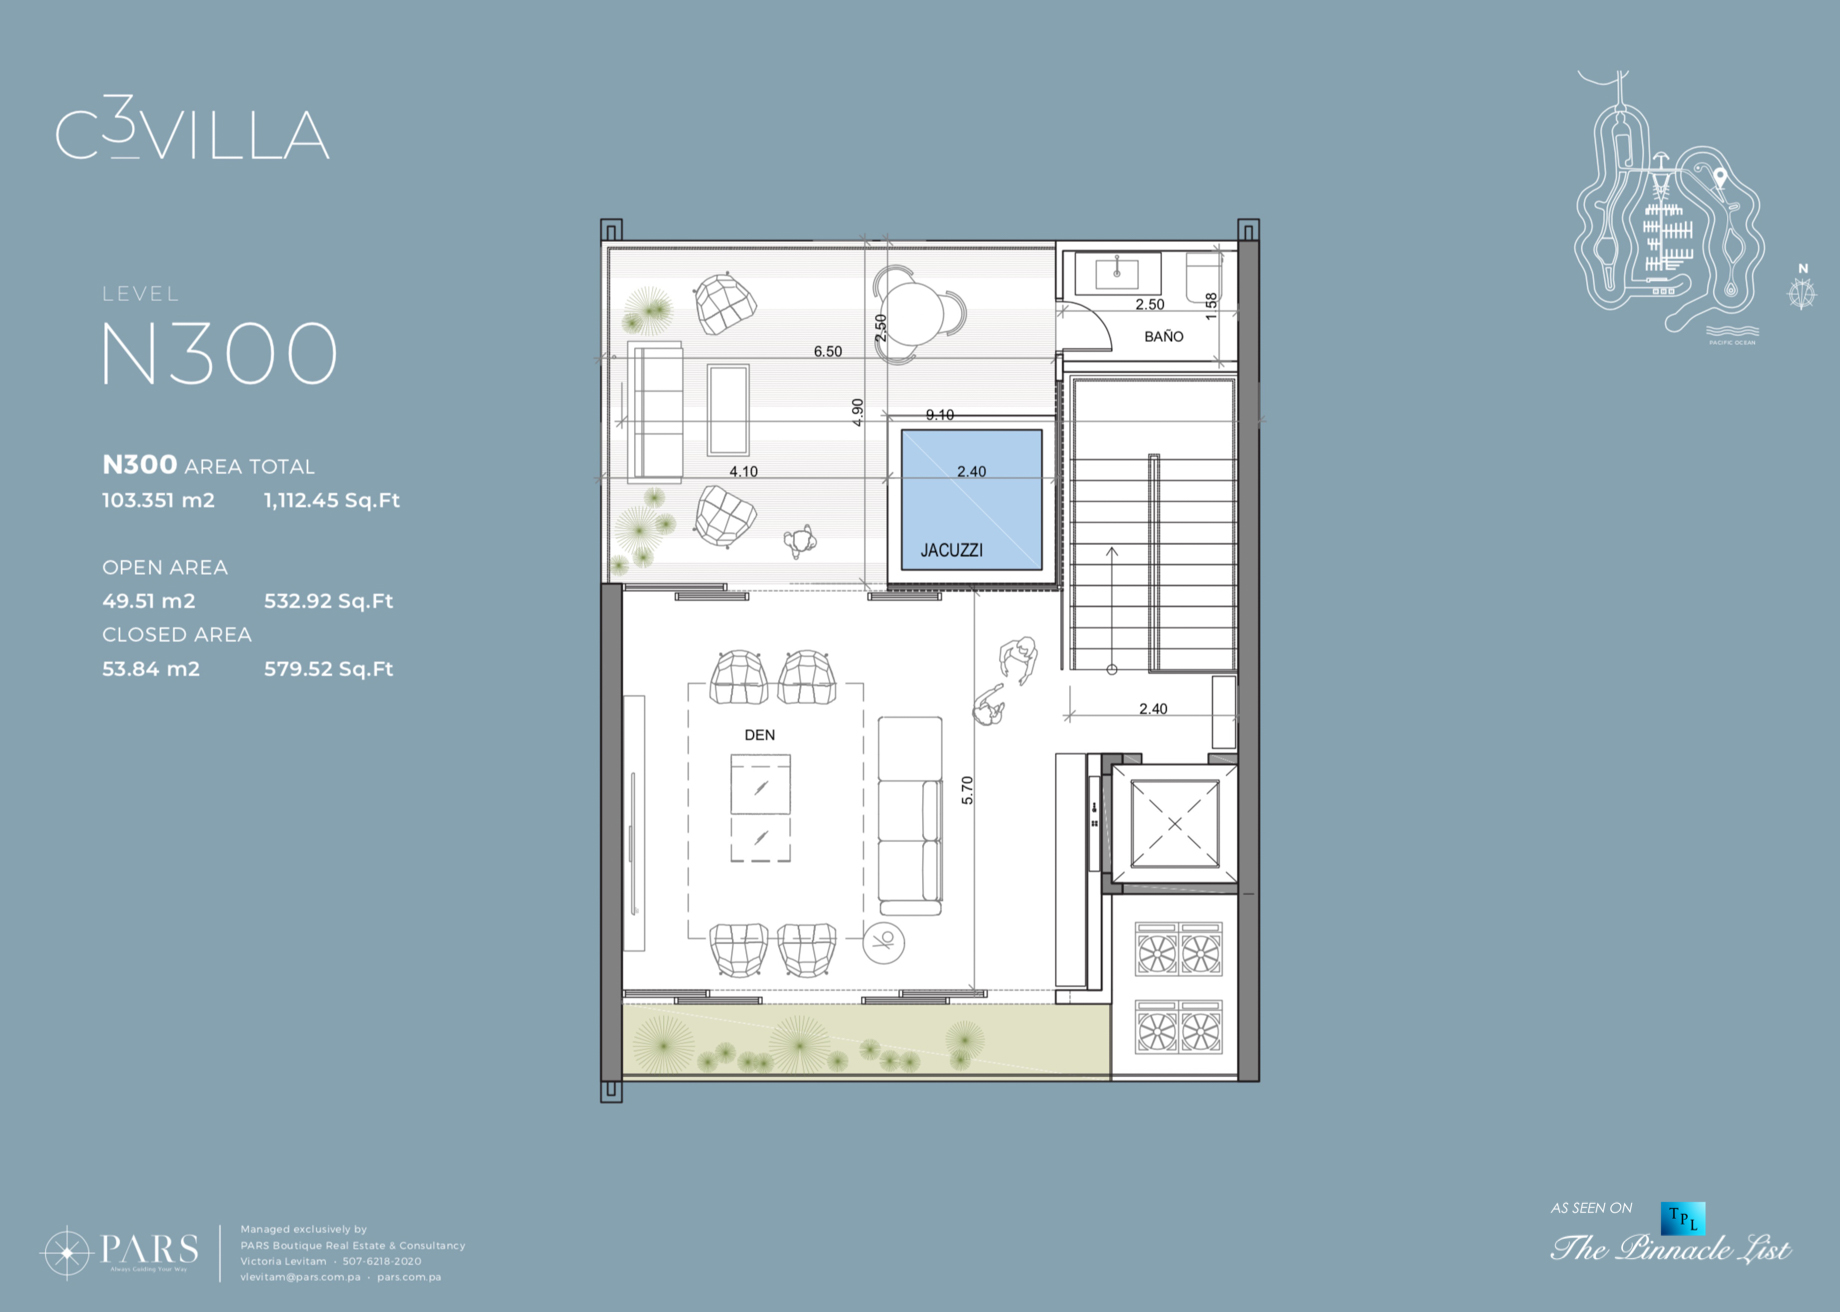 C3 Villa – Ocean Reef Islands, Panama – Floor Plans N300 Level